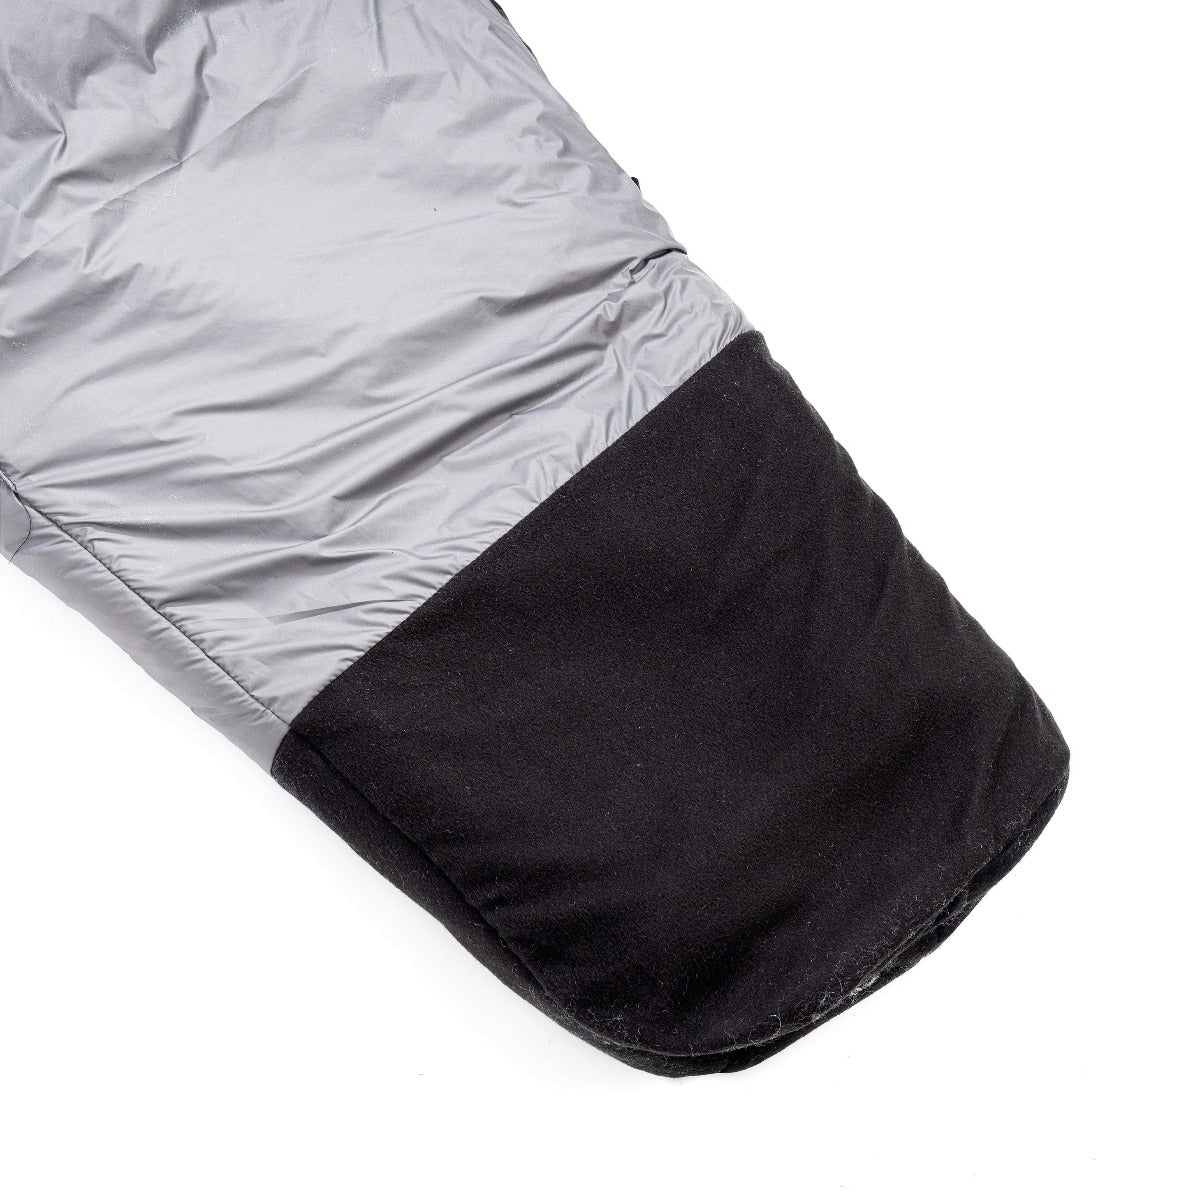 Shivalik Series 0°C Comfort Sleeping Bag - Black 5